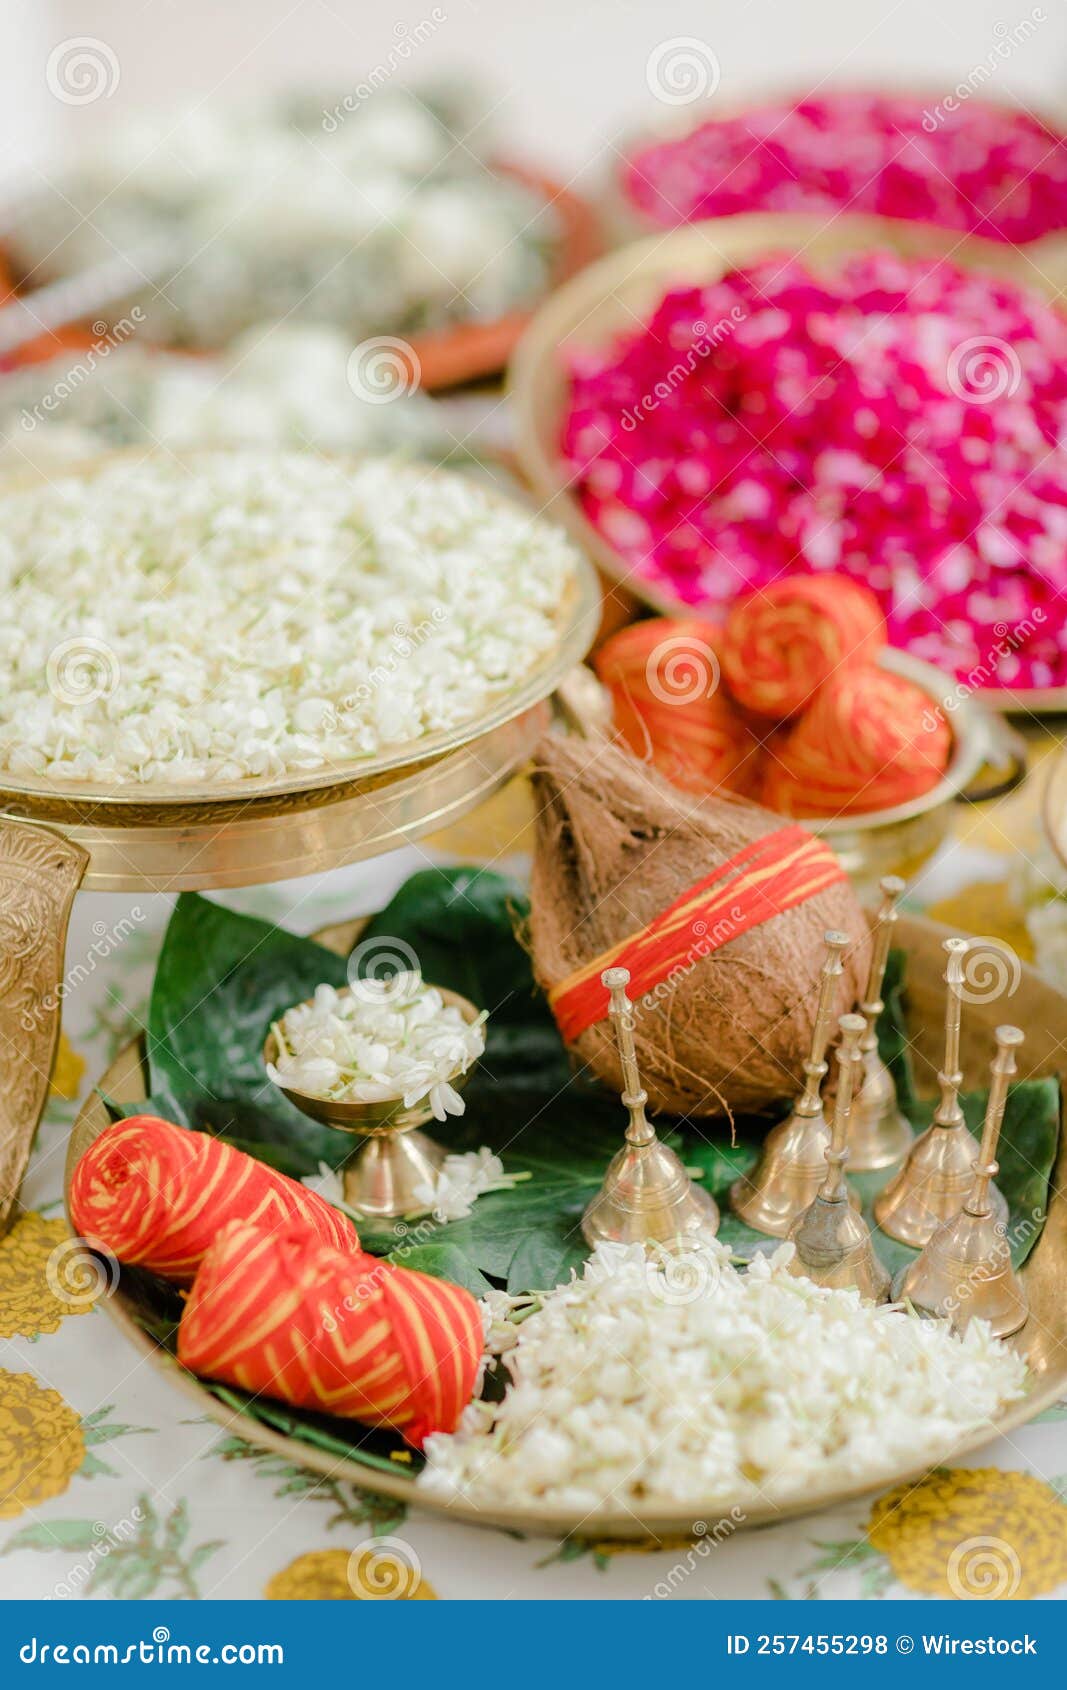 8 Thattu decoration ideas | thali decoration ideas, wedding gifts  packaging, coconut decoration